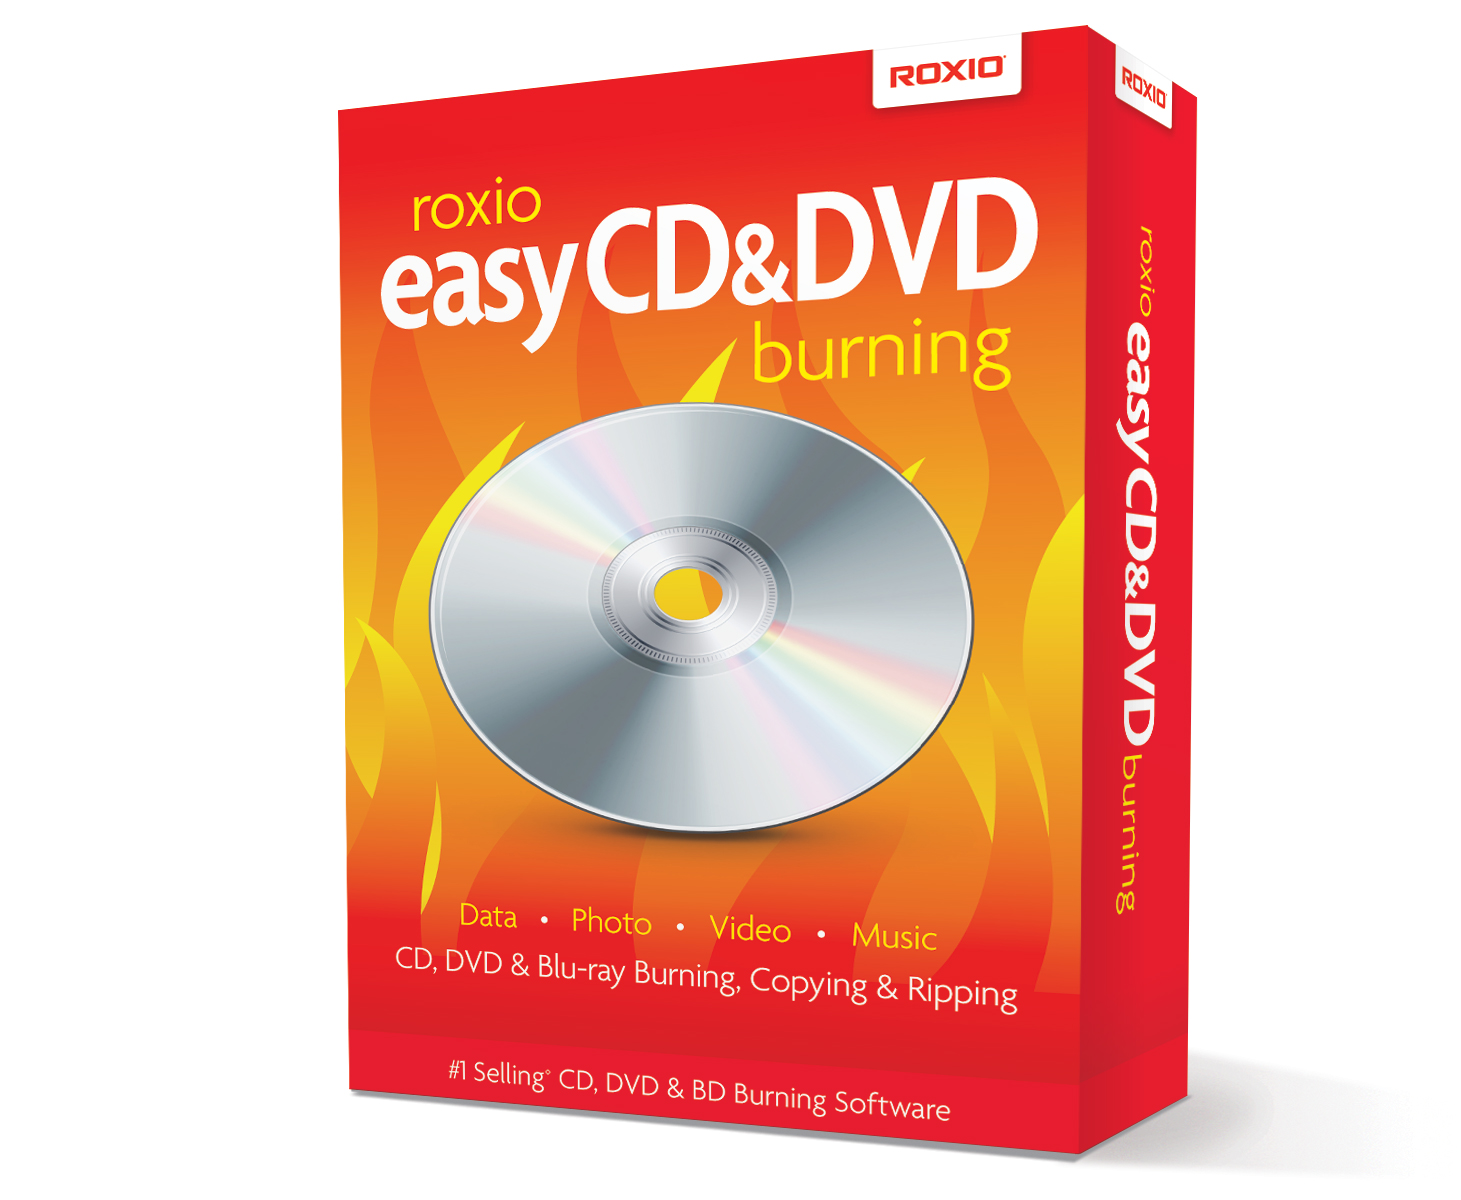 roxio easy cd dvd creator v6.0